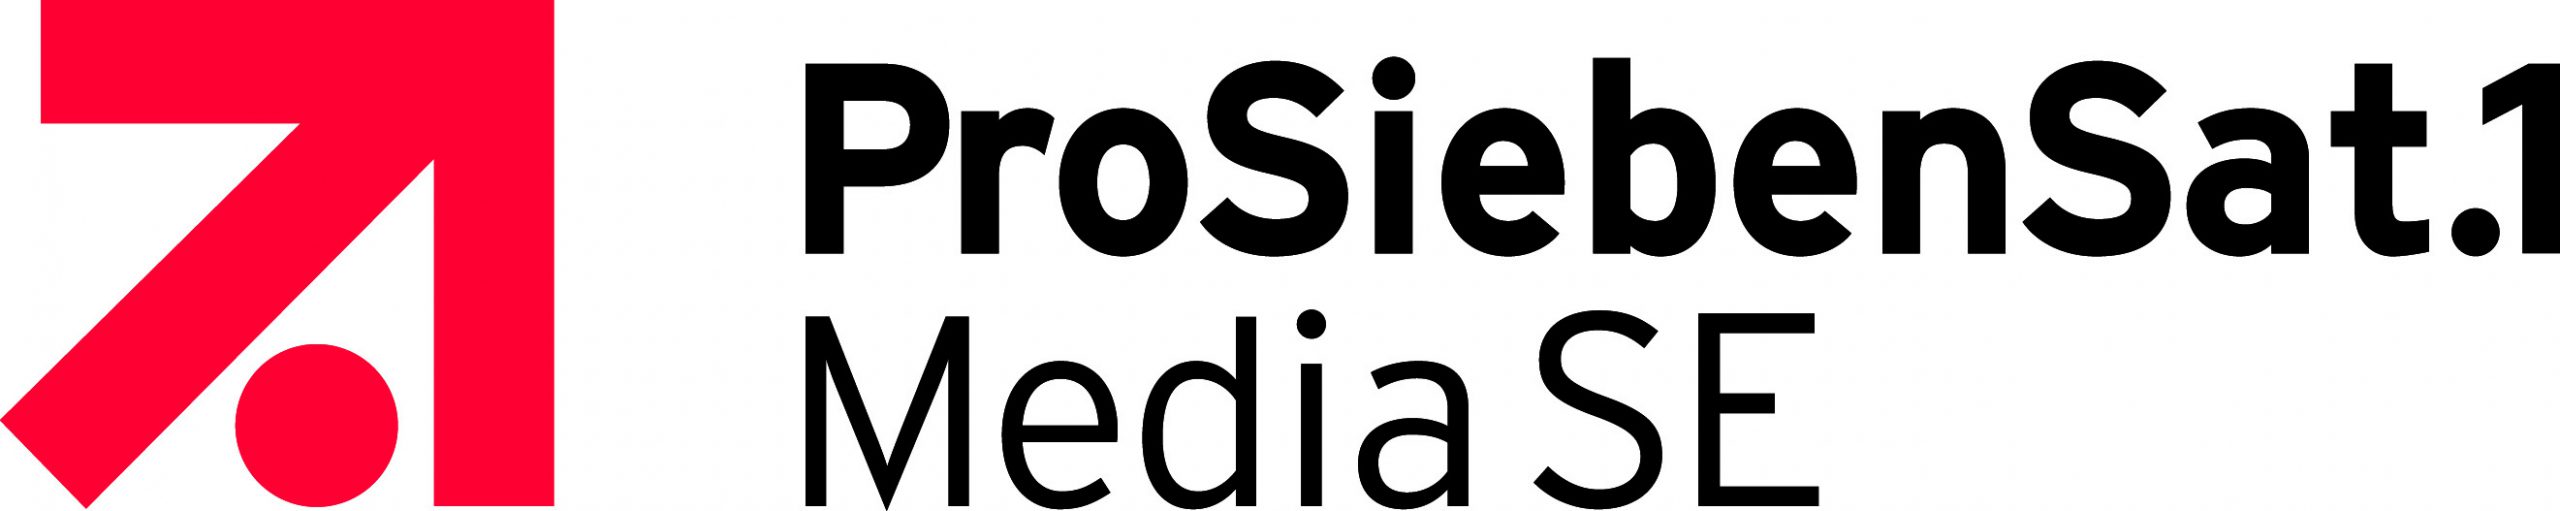 P7S1MediaSE_Logo